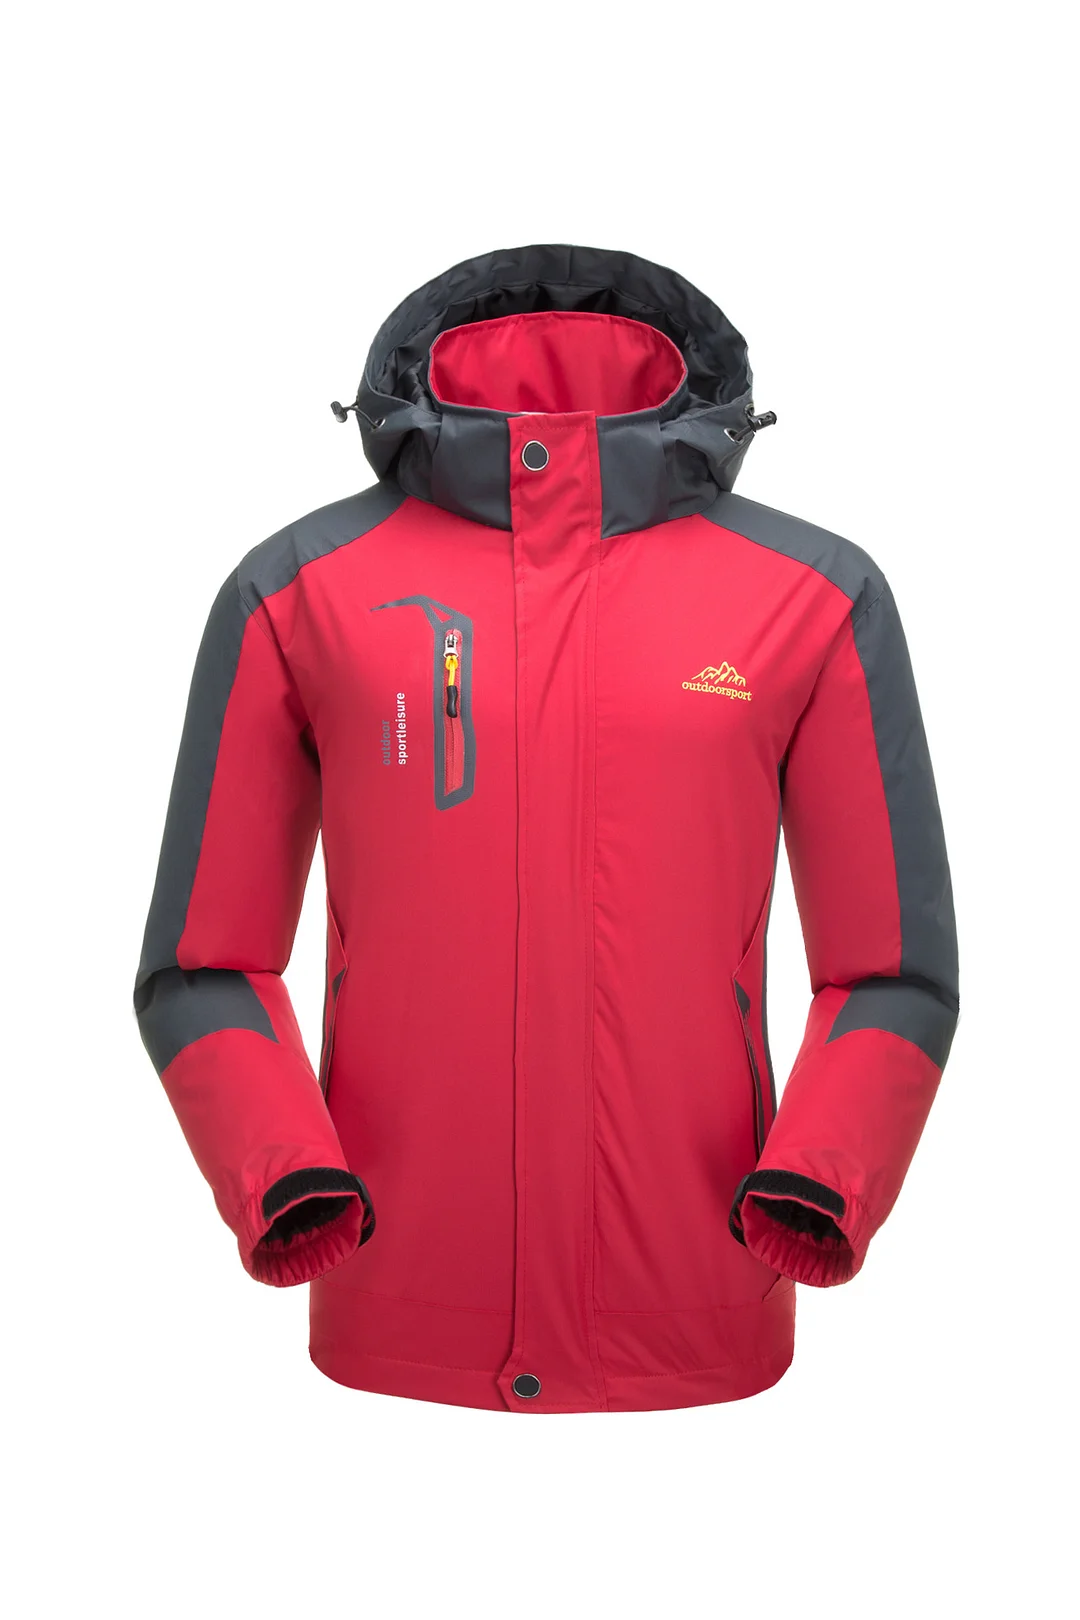 PASUXI Wholesale Men Lightweight Waterproof Hooded Rain Casual Jacket Outdoor Raincoat Windbreaker Hiking Jacket